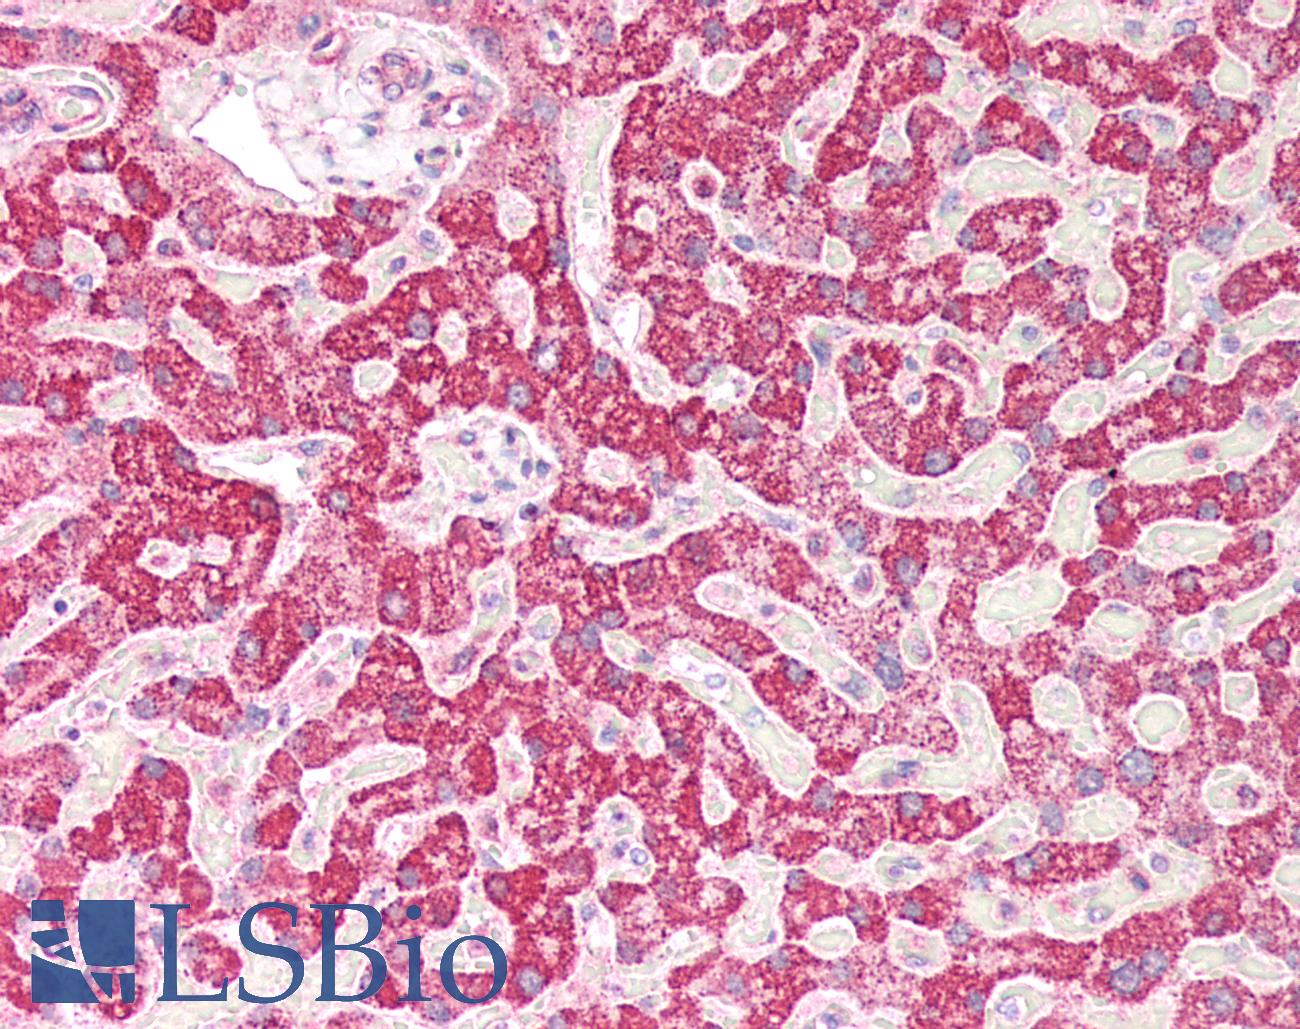 PCCB Antibody - Human Liver: Formalin-Fixed, Paraffin-Embedded (FFPE)